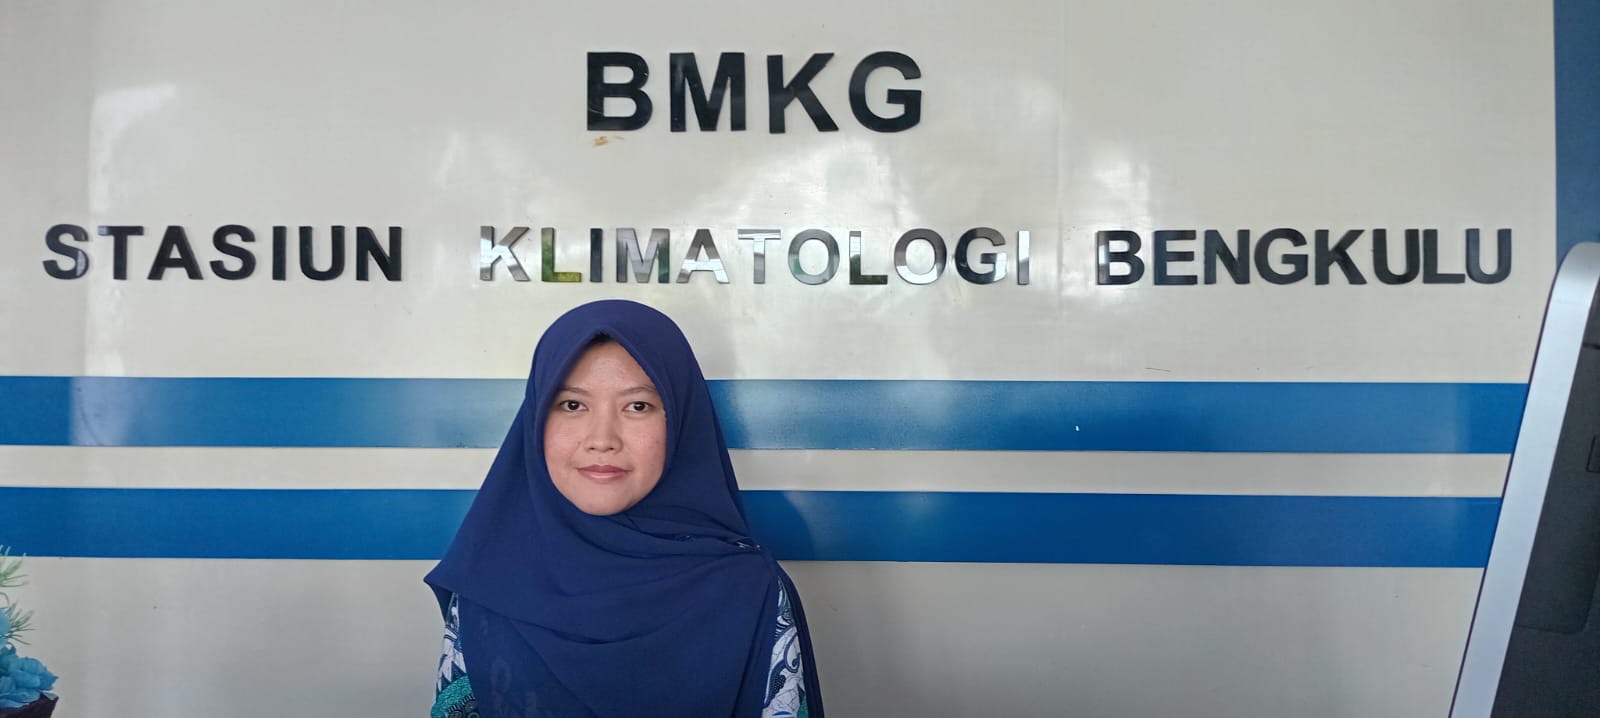 BMKG Ingatkan 6 Daerah di Bengkulu Siaga Bencana Hidrometeorologi